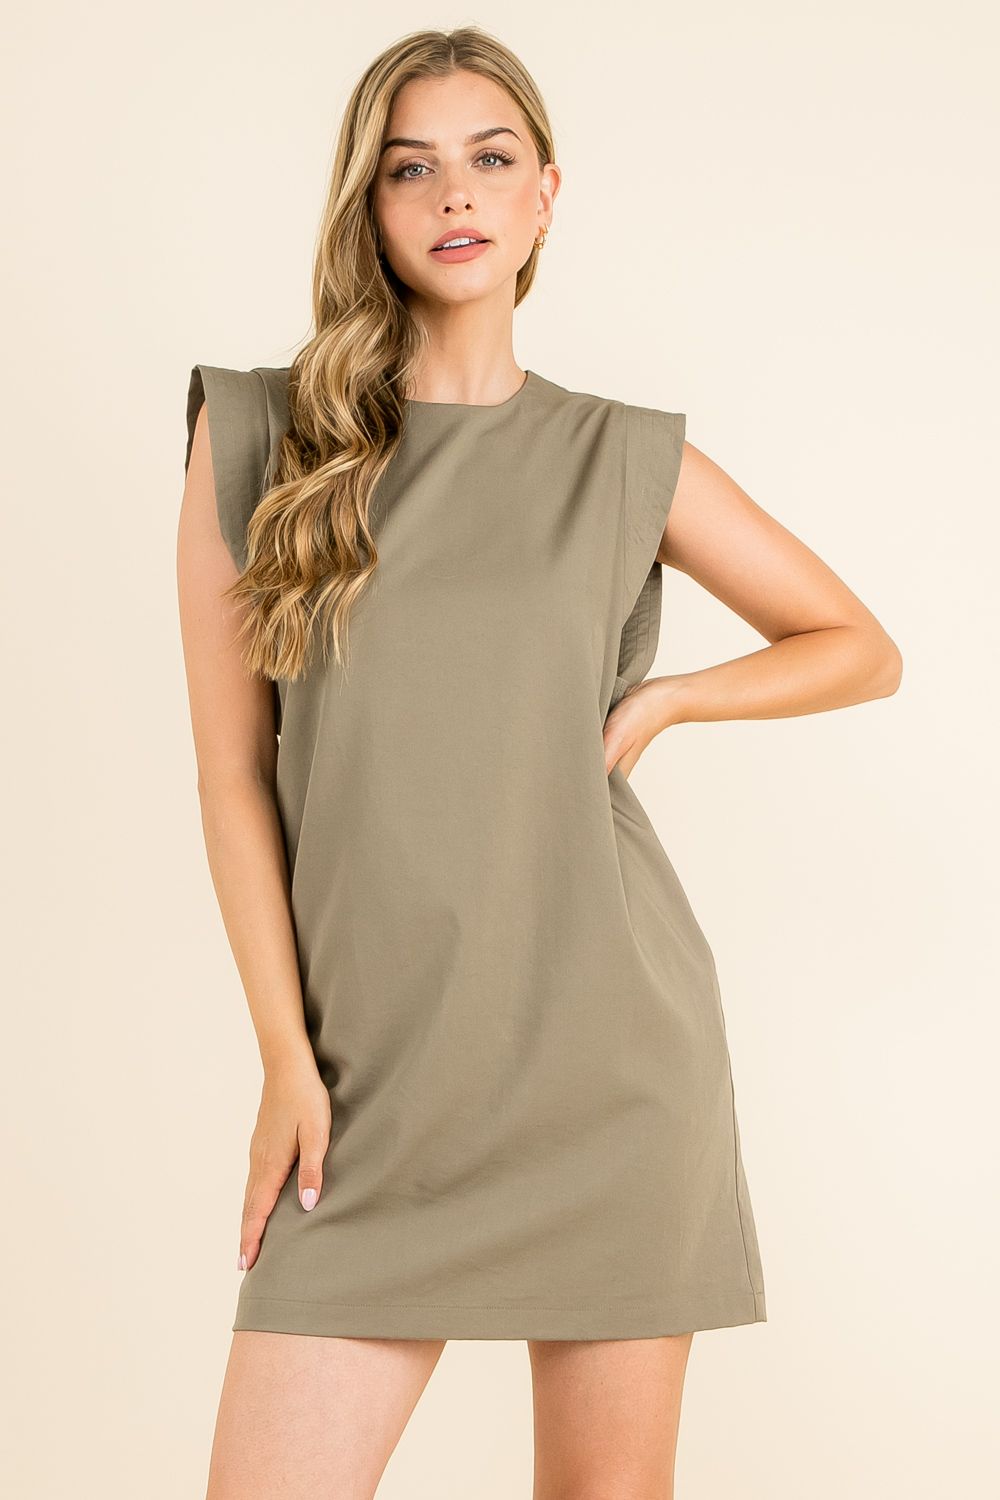 Olive Cap Sleeve Dress